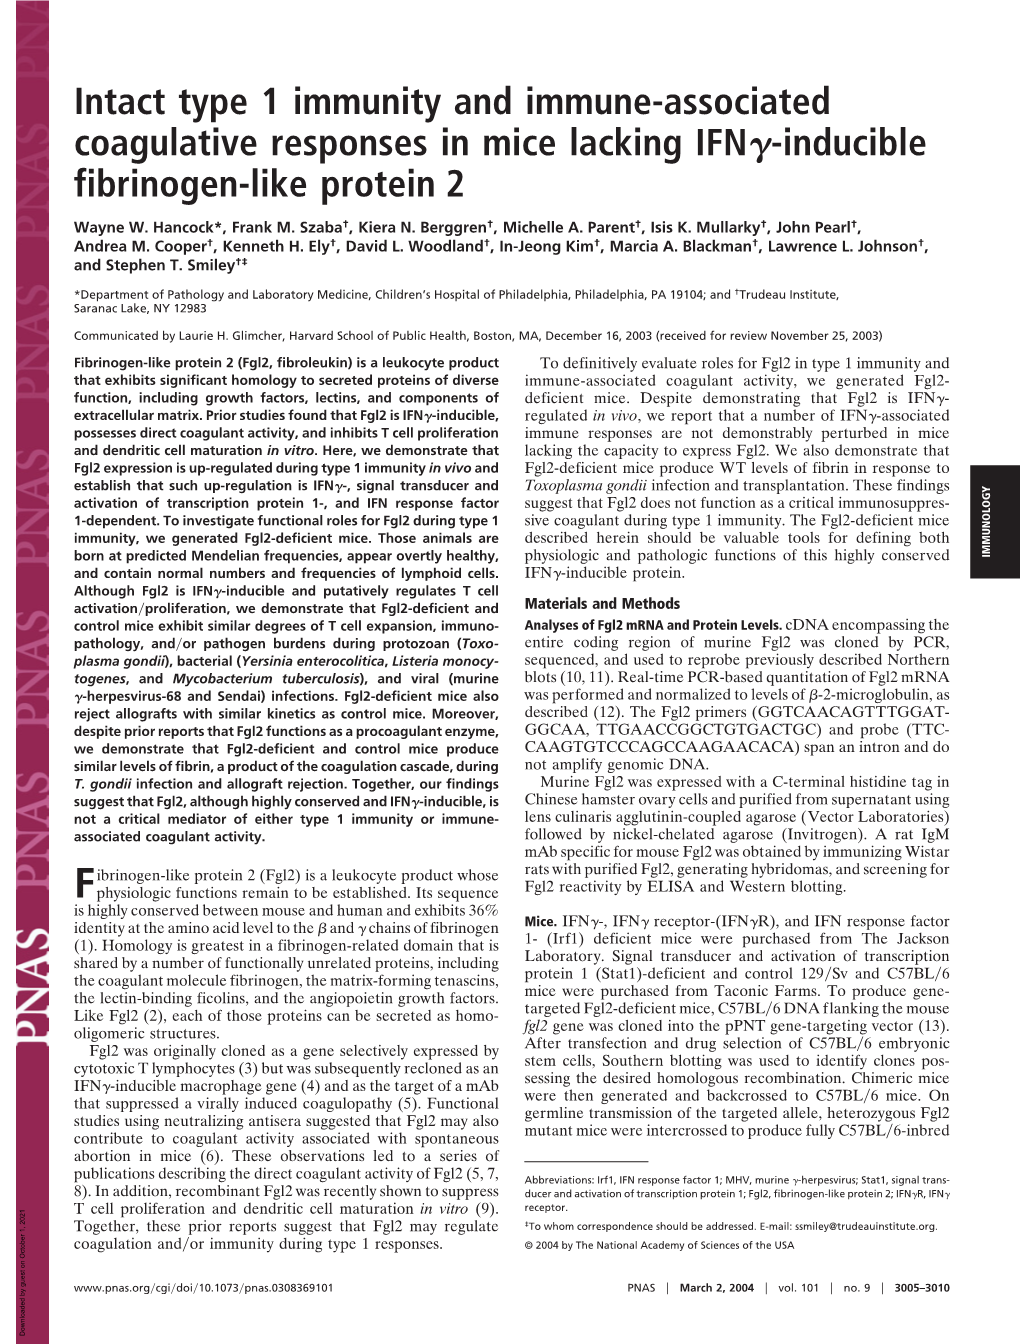 Inducible Fibrinogen-Like Protein 2